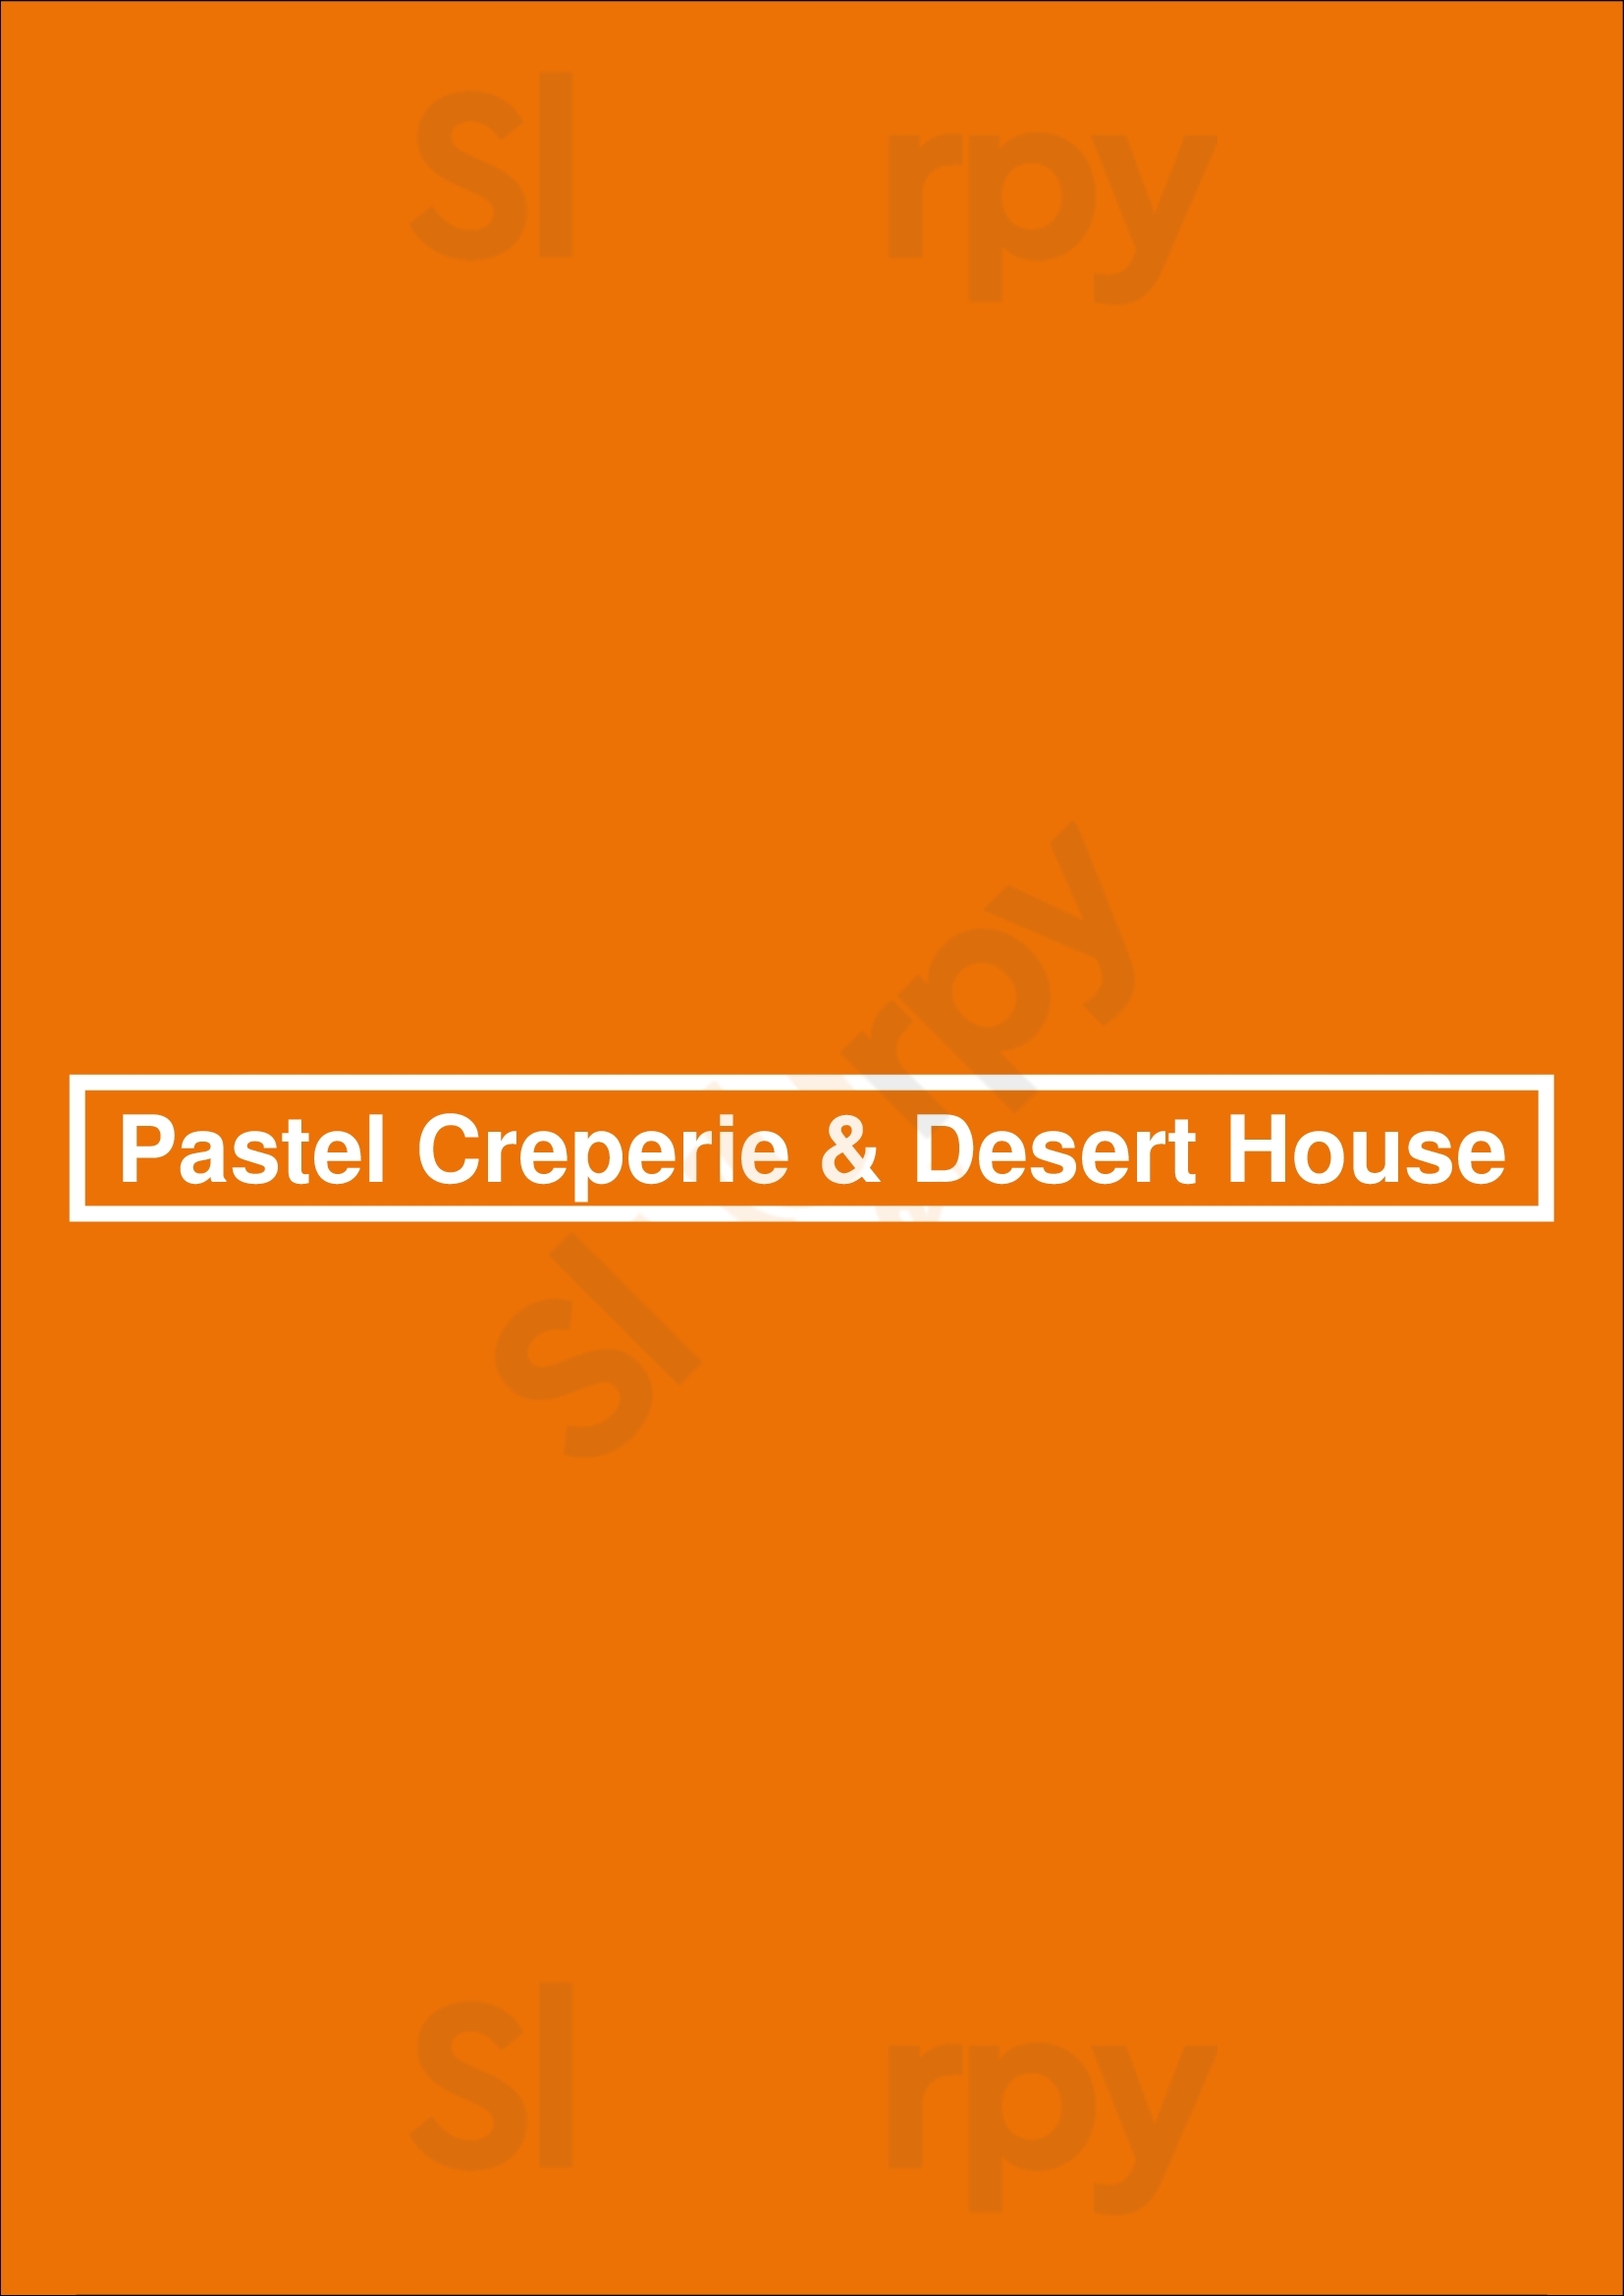 Pastel Creperie & Desert House Toronto Menu - 1